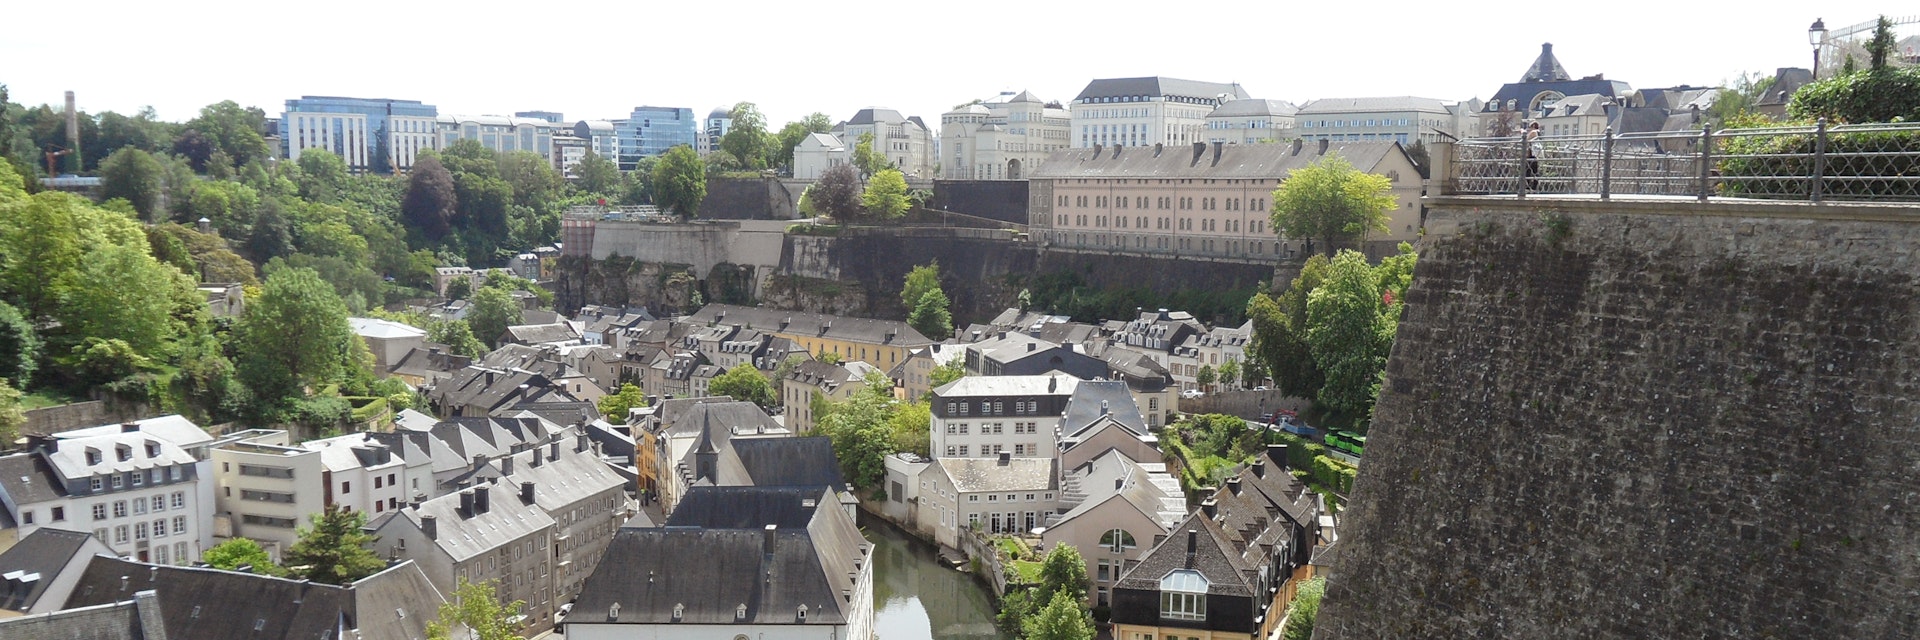 Stunning view of the lower city along Alzette river and Le Chemin de la Corniche of the upper city, Luxembourg